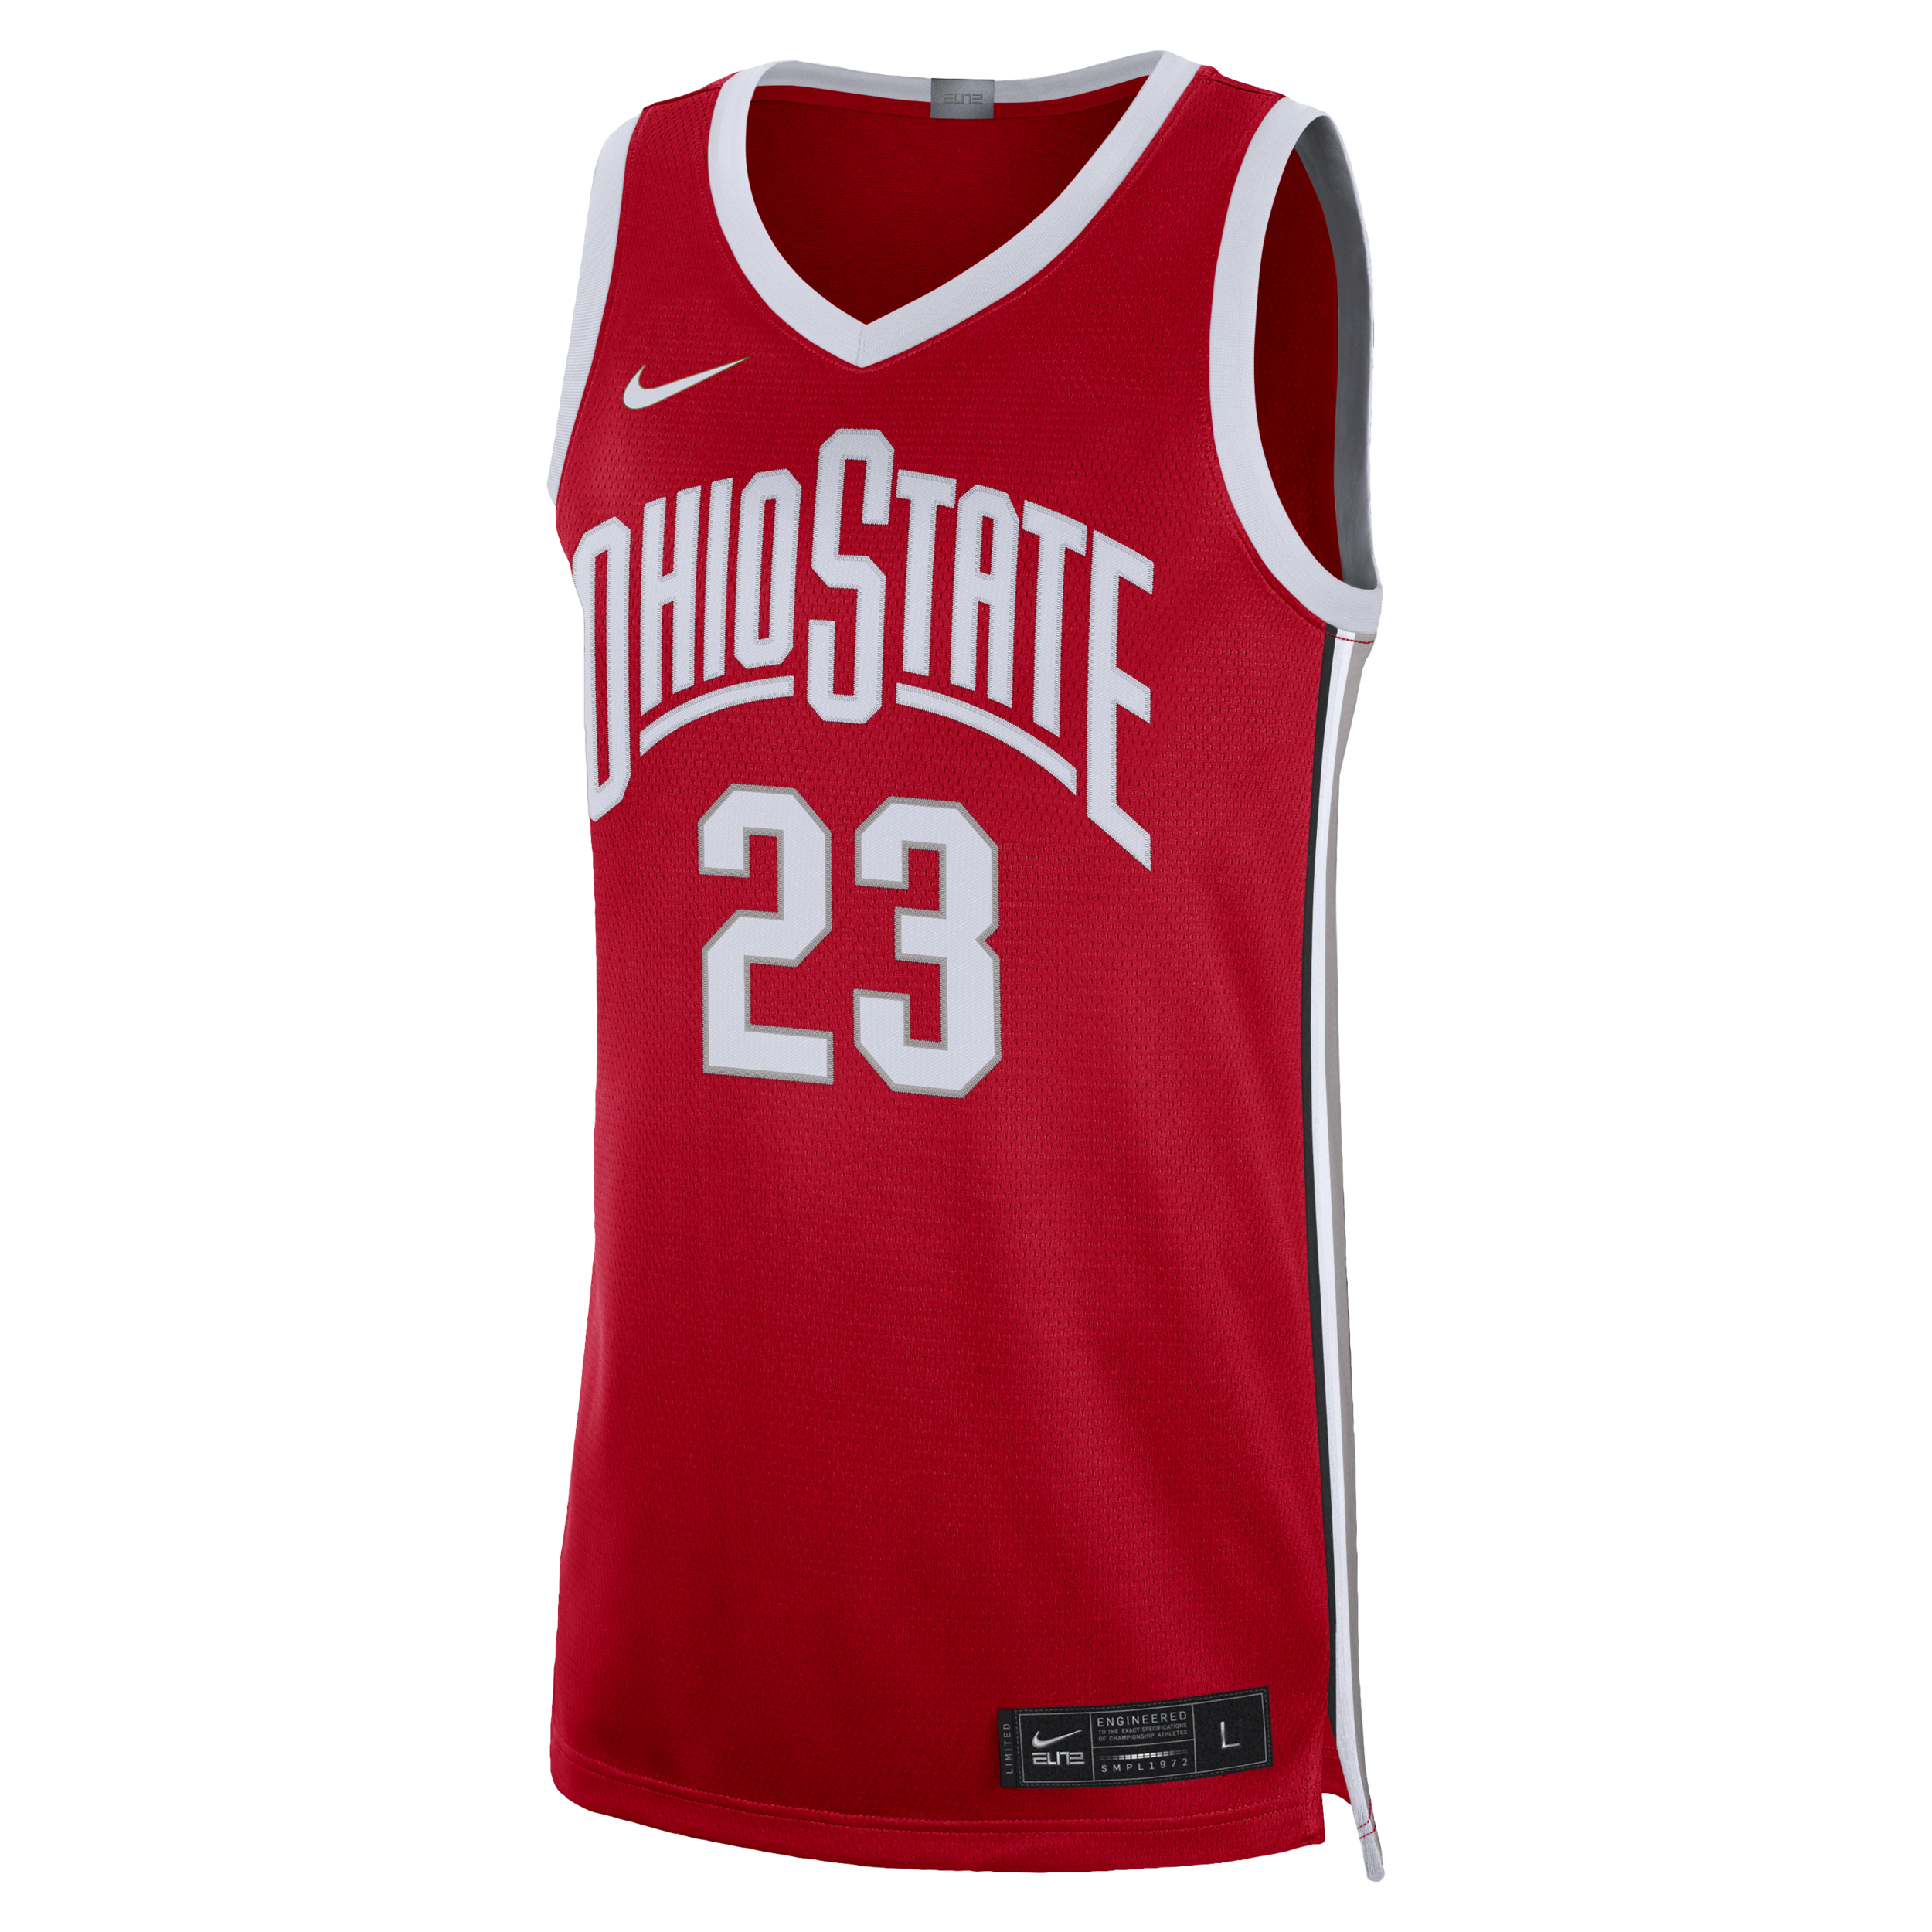 Ohio State Limited Nike universiteitsbasketbaljersey met Dri-FIT voor heren - Rood